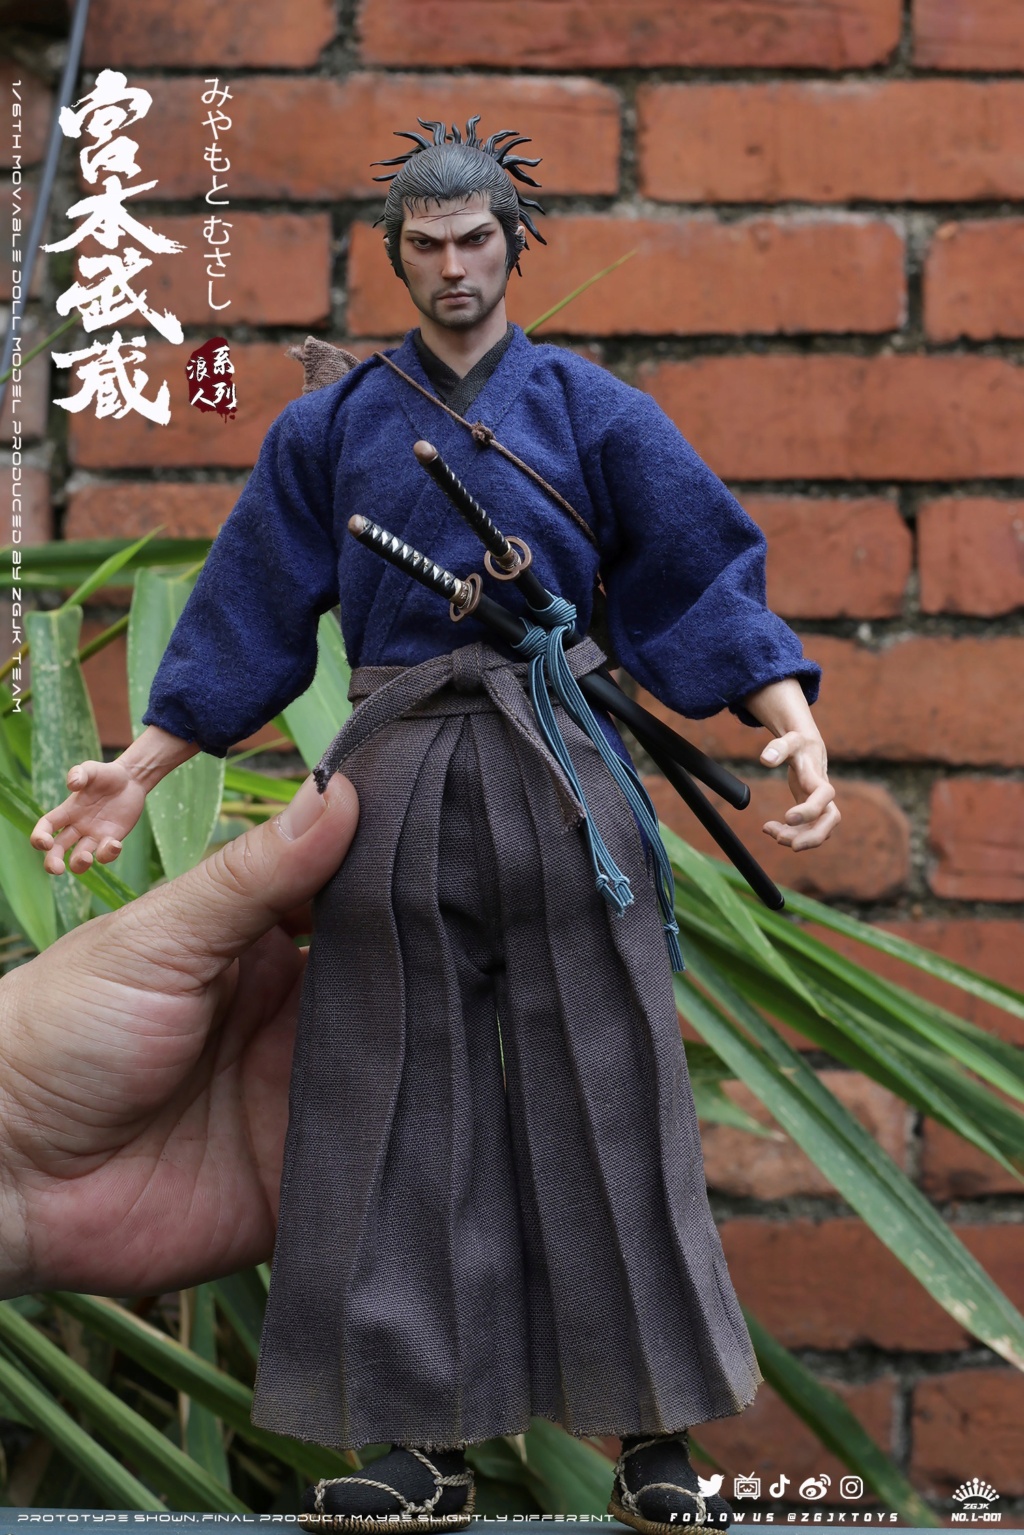 MEW PRODUCT: ZGJKTOYS: Ronin Series 1/6 Miyamoto Musashi Action Figure ------ Updated Official Figure 8678eb10